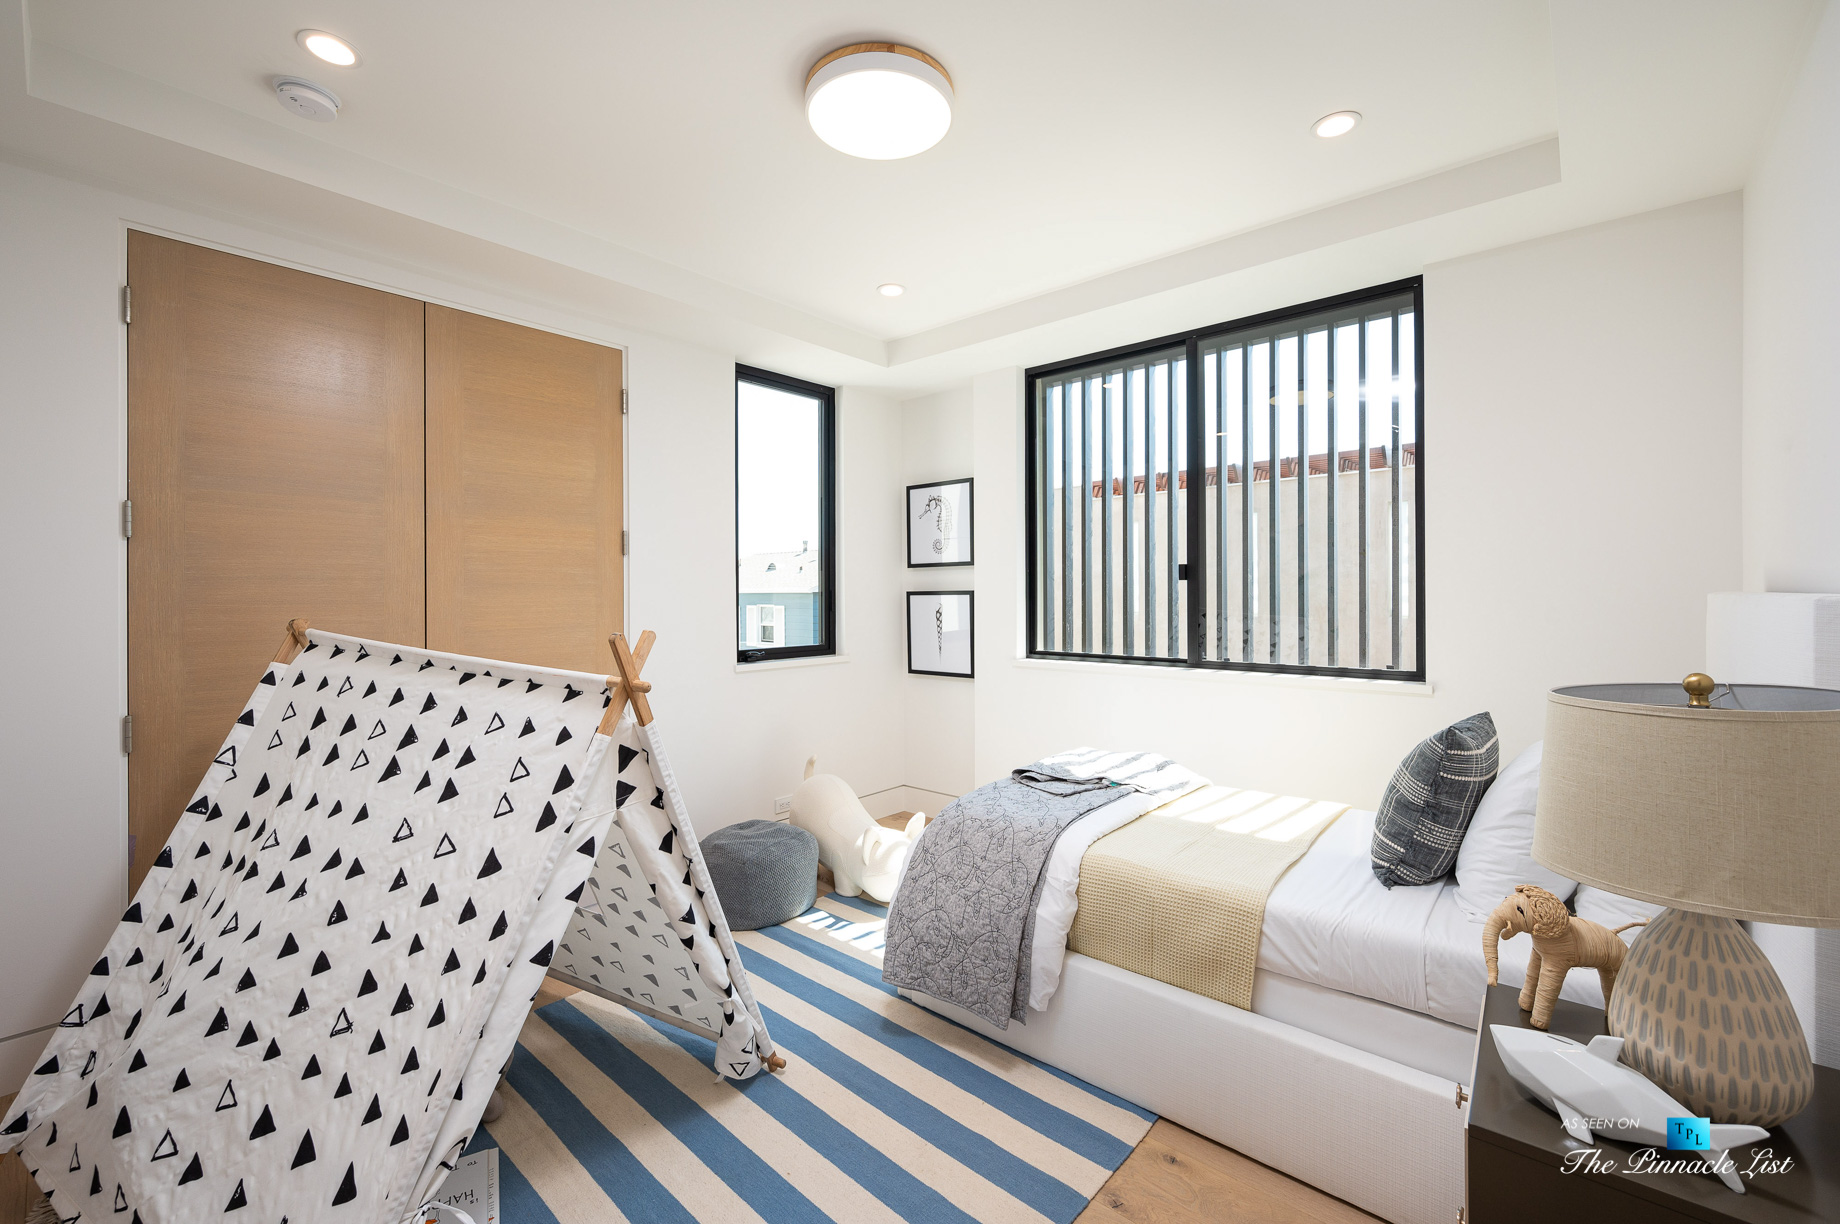 2016 Ocean Dr, Manhattan Beach, CA, USA – Bedroom – Luxury Real Estate – Modern Ocean View Home